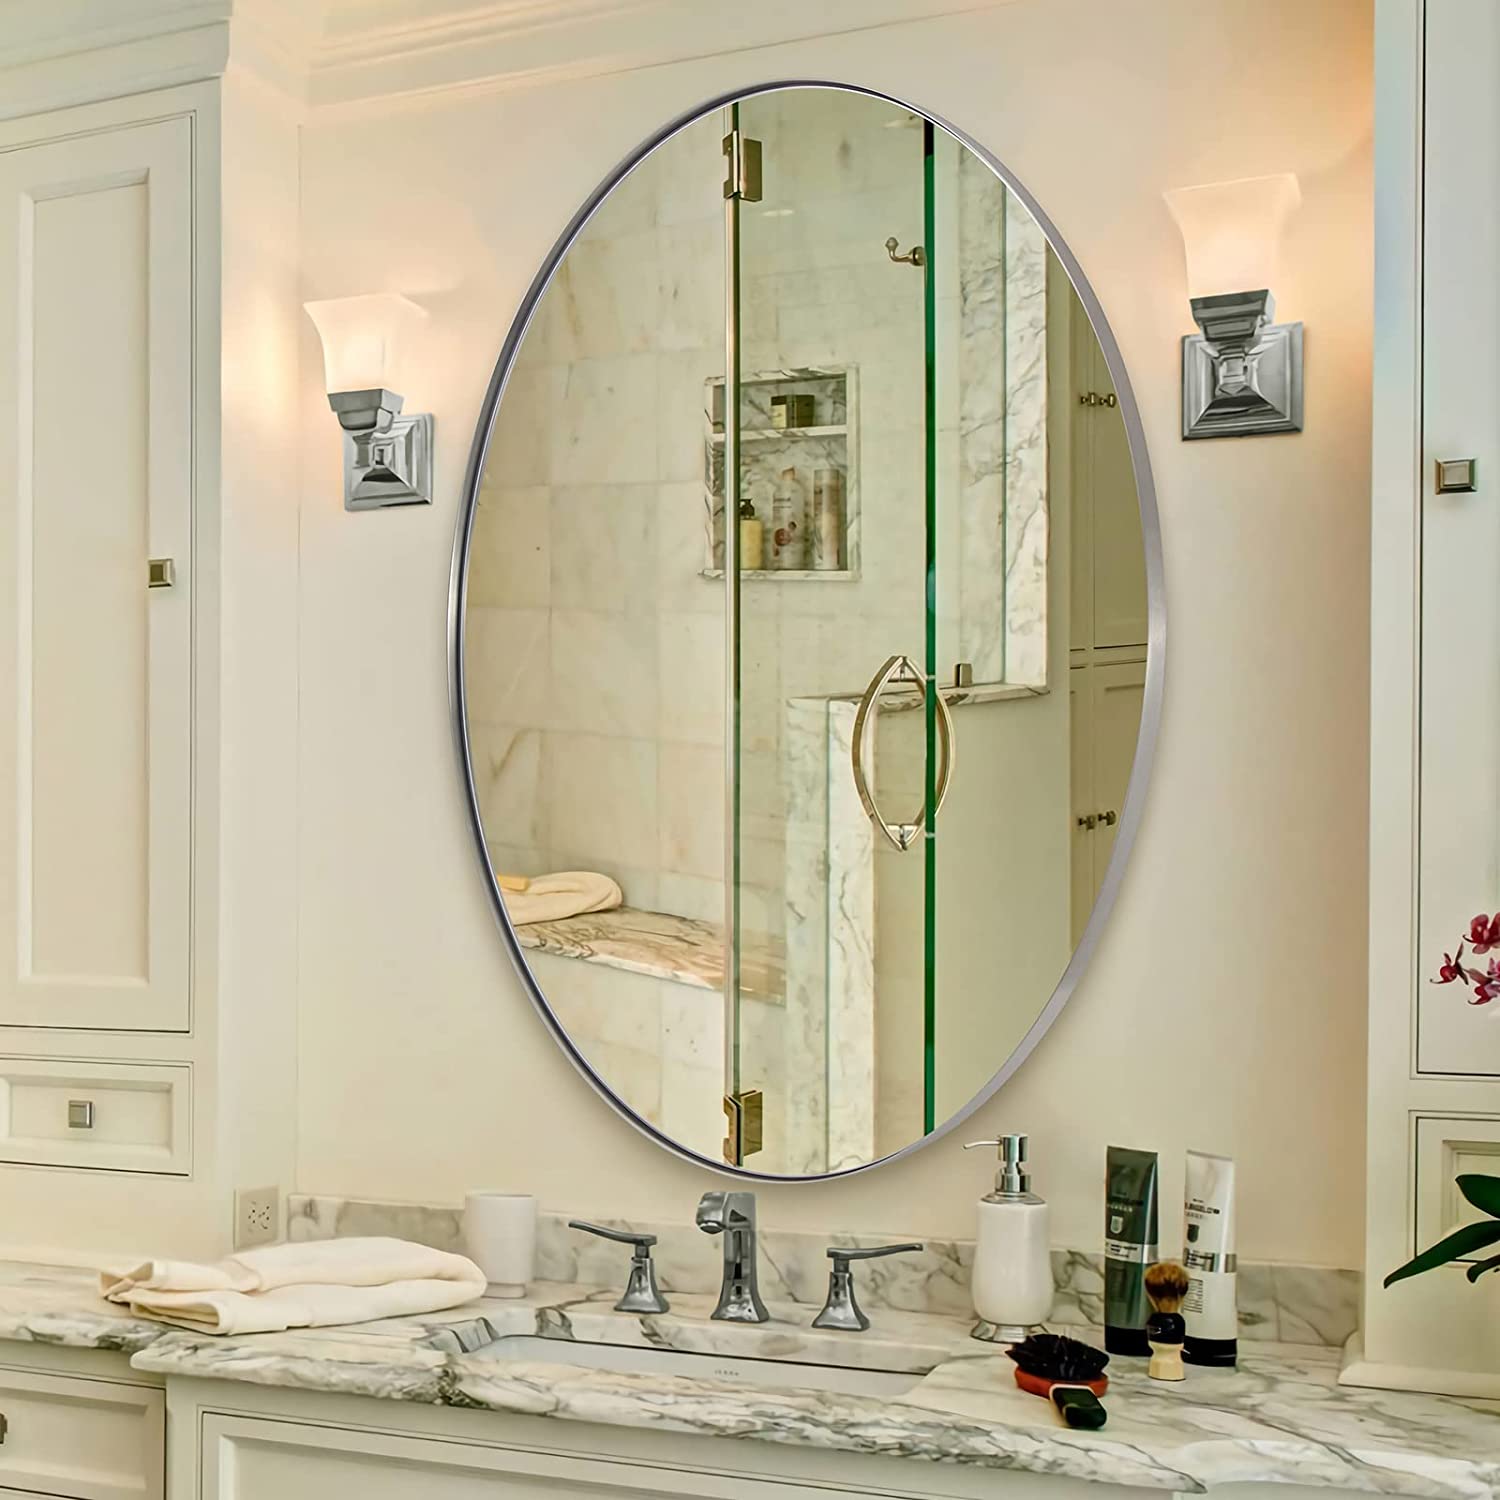 Modern Bathroom Oval Vanity Mirrors |Stainless Steel Frame Mounted Horizontal or Vertical#color_brushed nickel